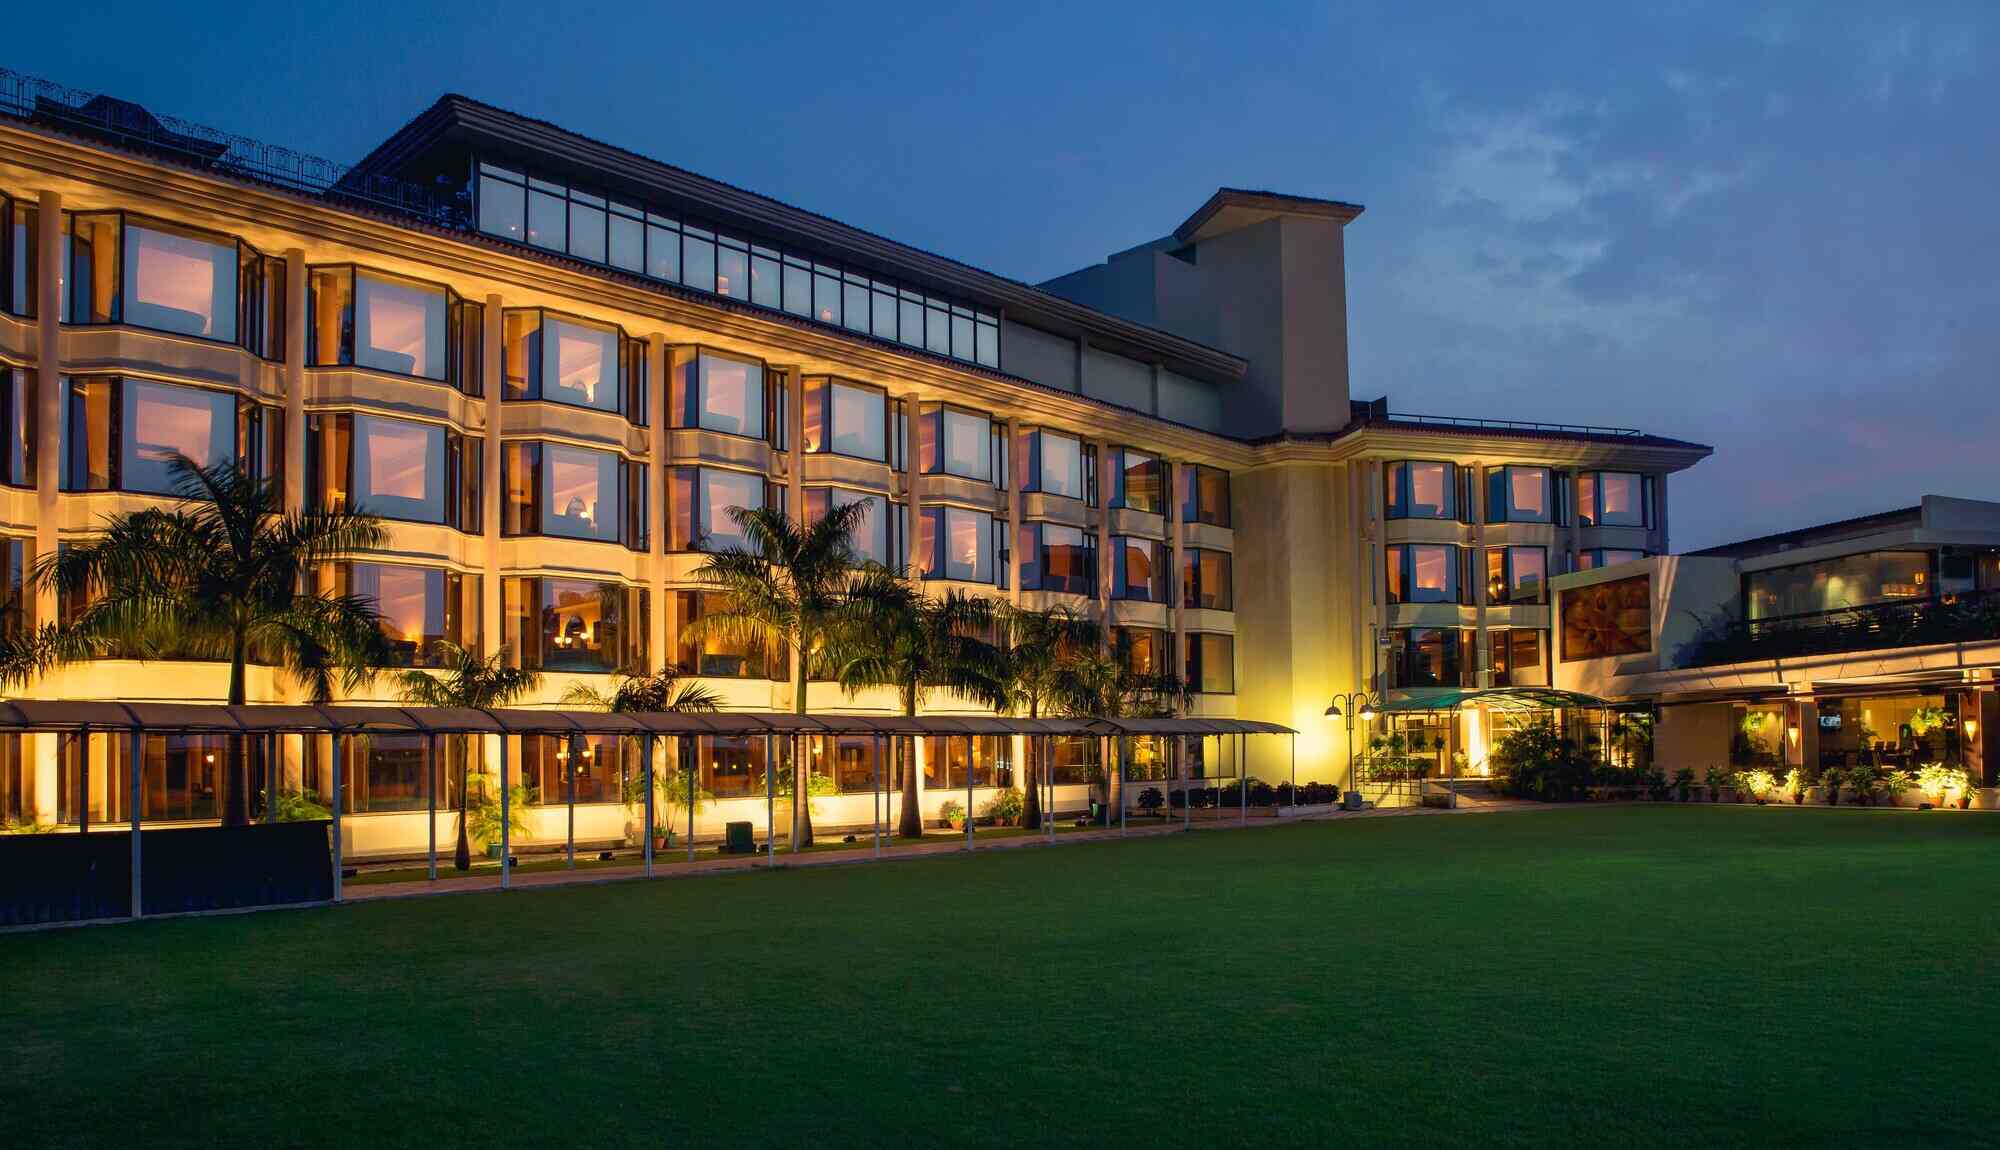 1707734402round-the-clock-hotel-mountview-chandigarh-sector-10-chandigarh-south-indian-restaurants-kdl8r99s0d.jpg